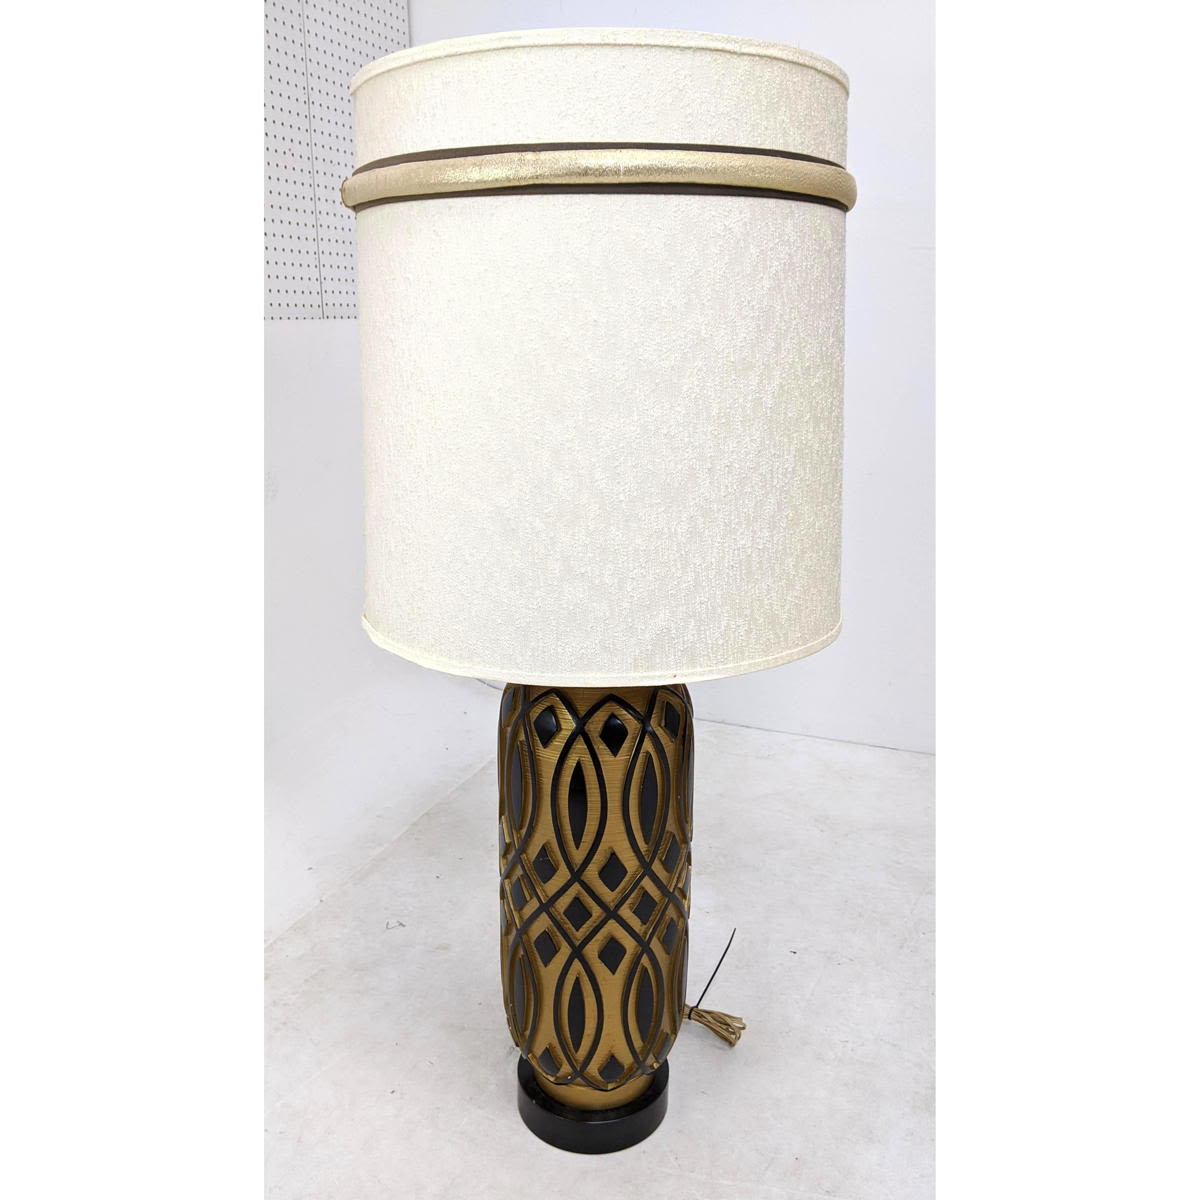 Oversized FAIP Table Lamp. Decorator